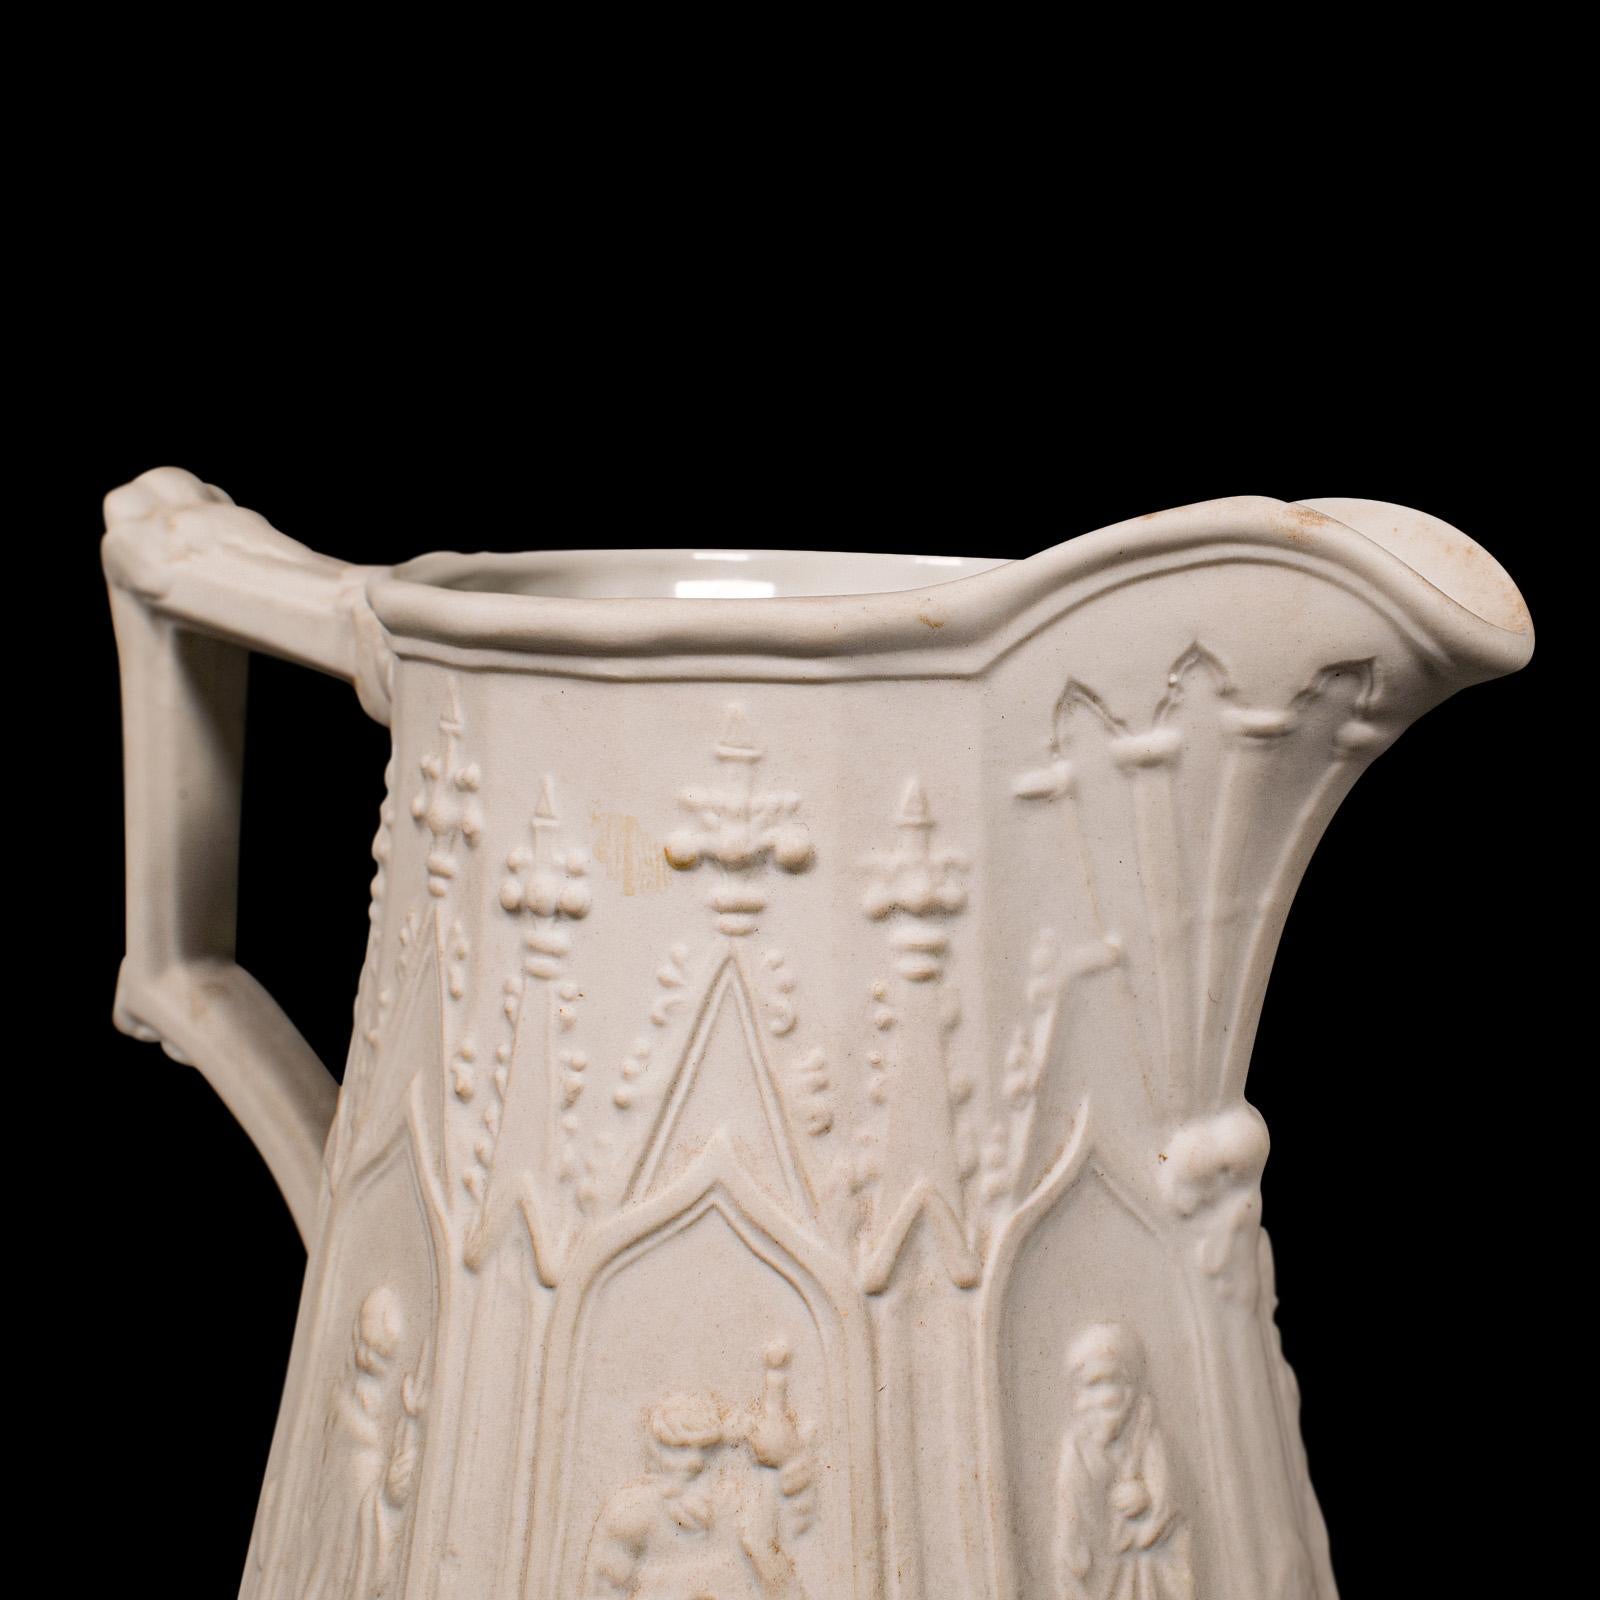 Vintage Pouring Jug, English, Parian Ware Ceramic, Serving Creamer, Decorative For Sale 2